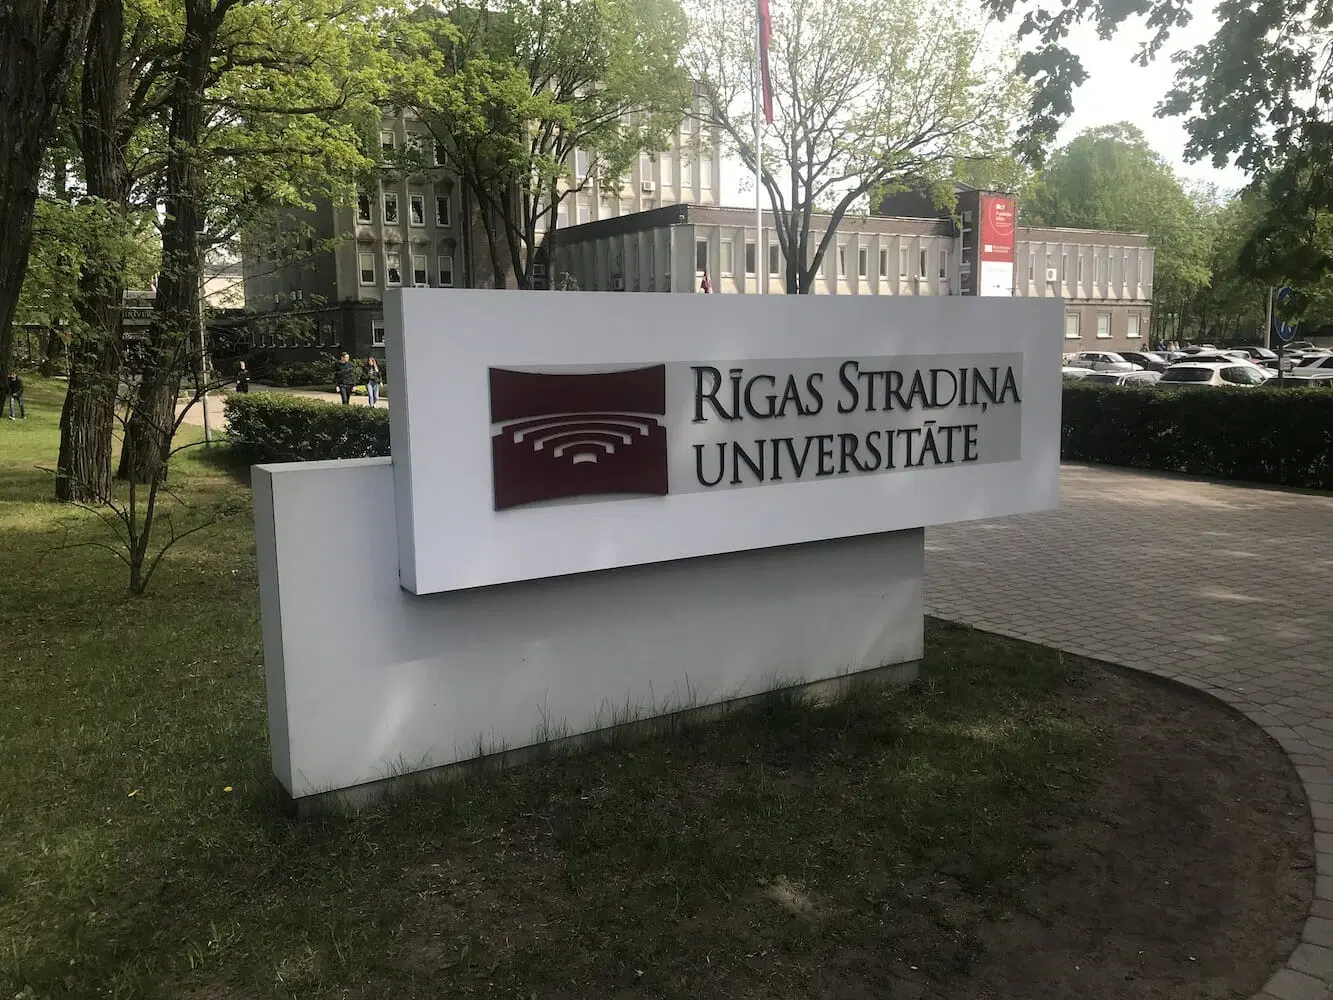 Riga Stradins Üniversitesi